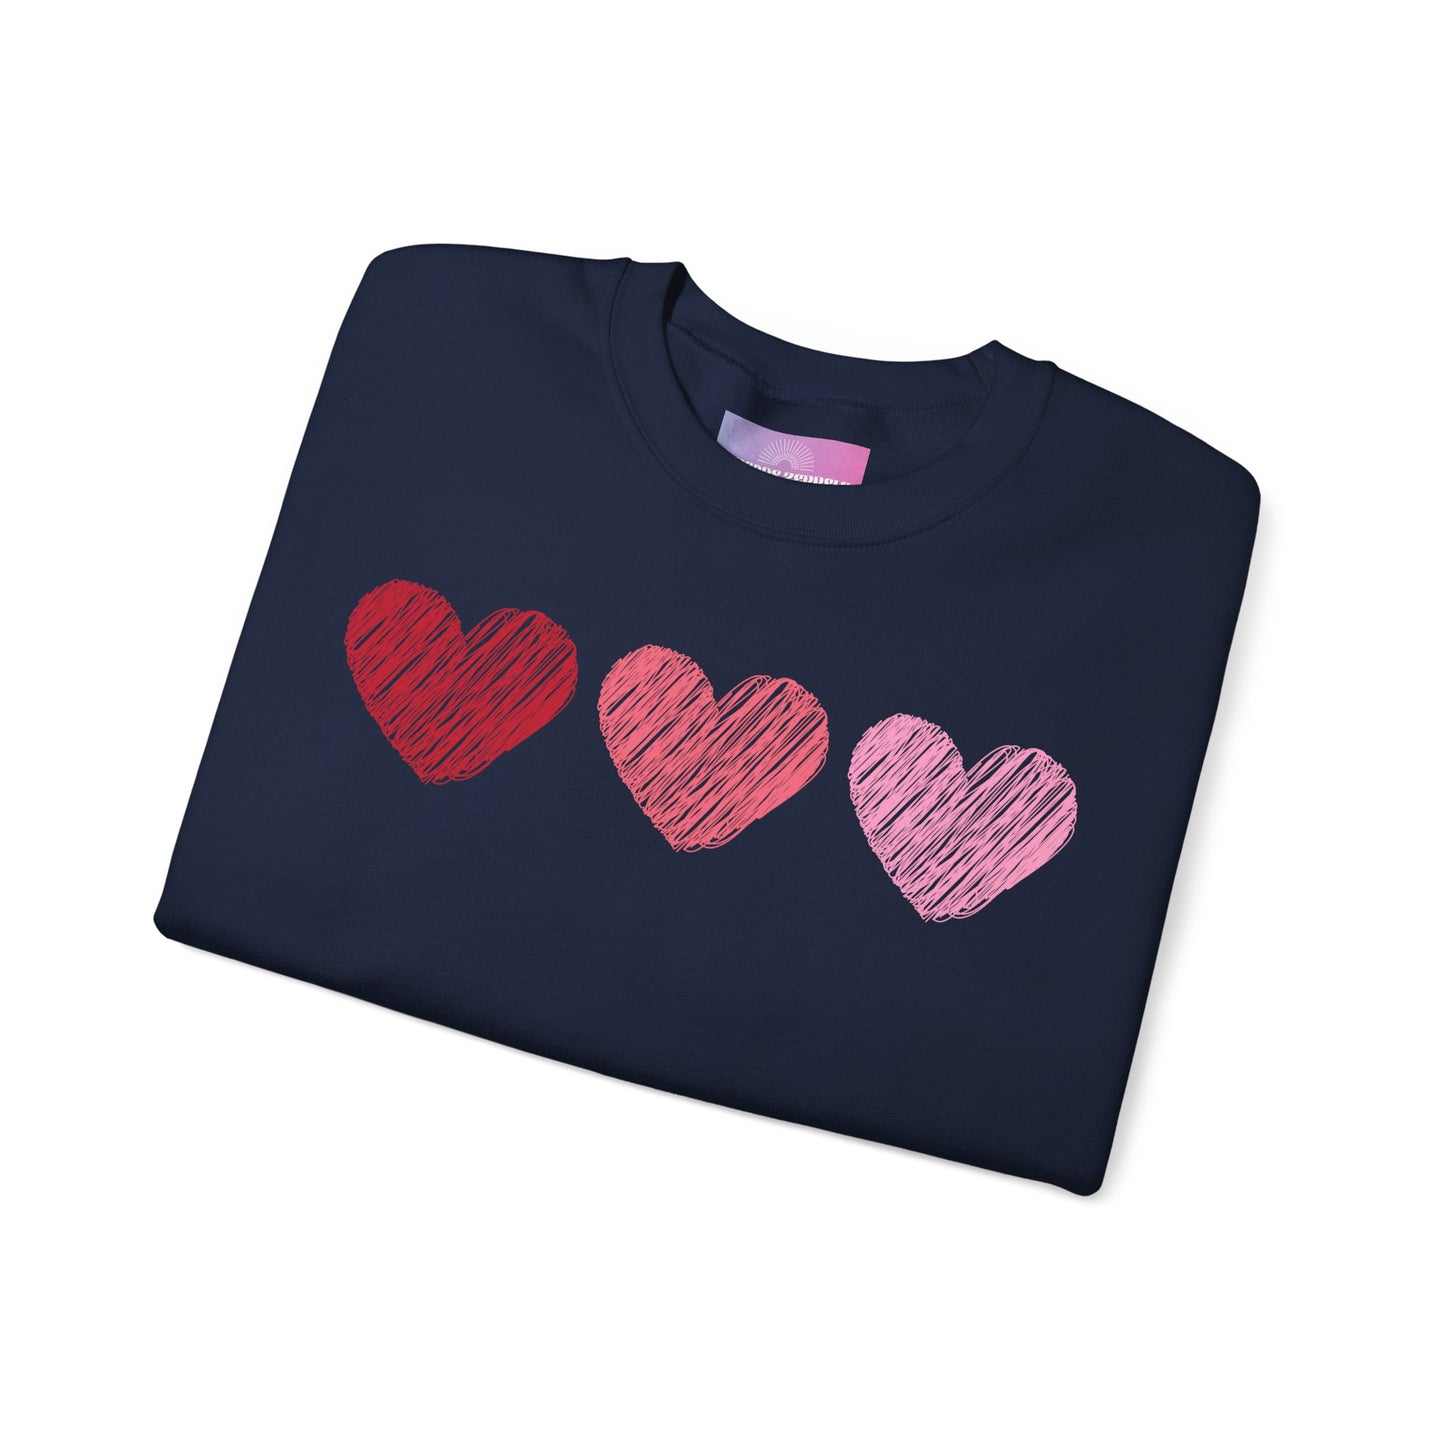 Valentines Day Hearts Sweatshirt, Funny Valentines Day Crewneck Sweater, Gift for bestie, Anti Valentines Day, Cupids Arrow, Gift for her